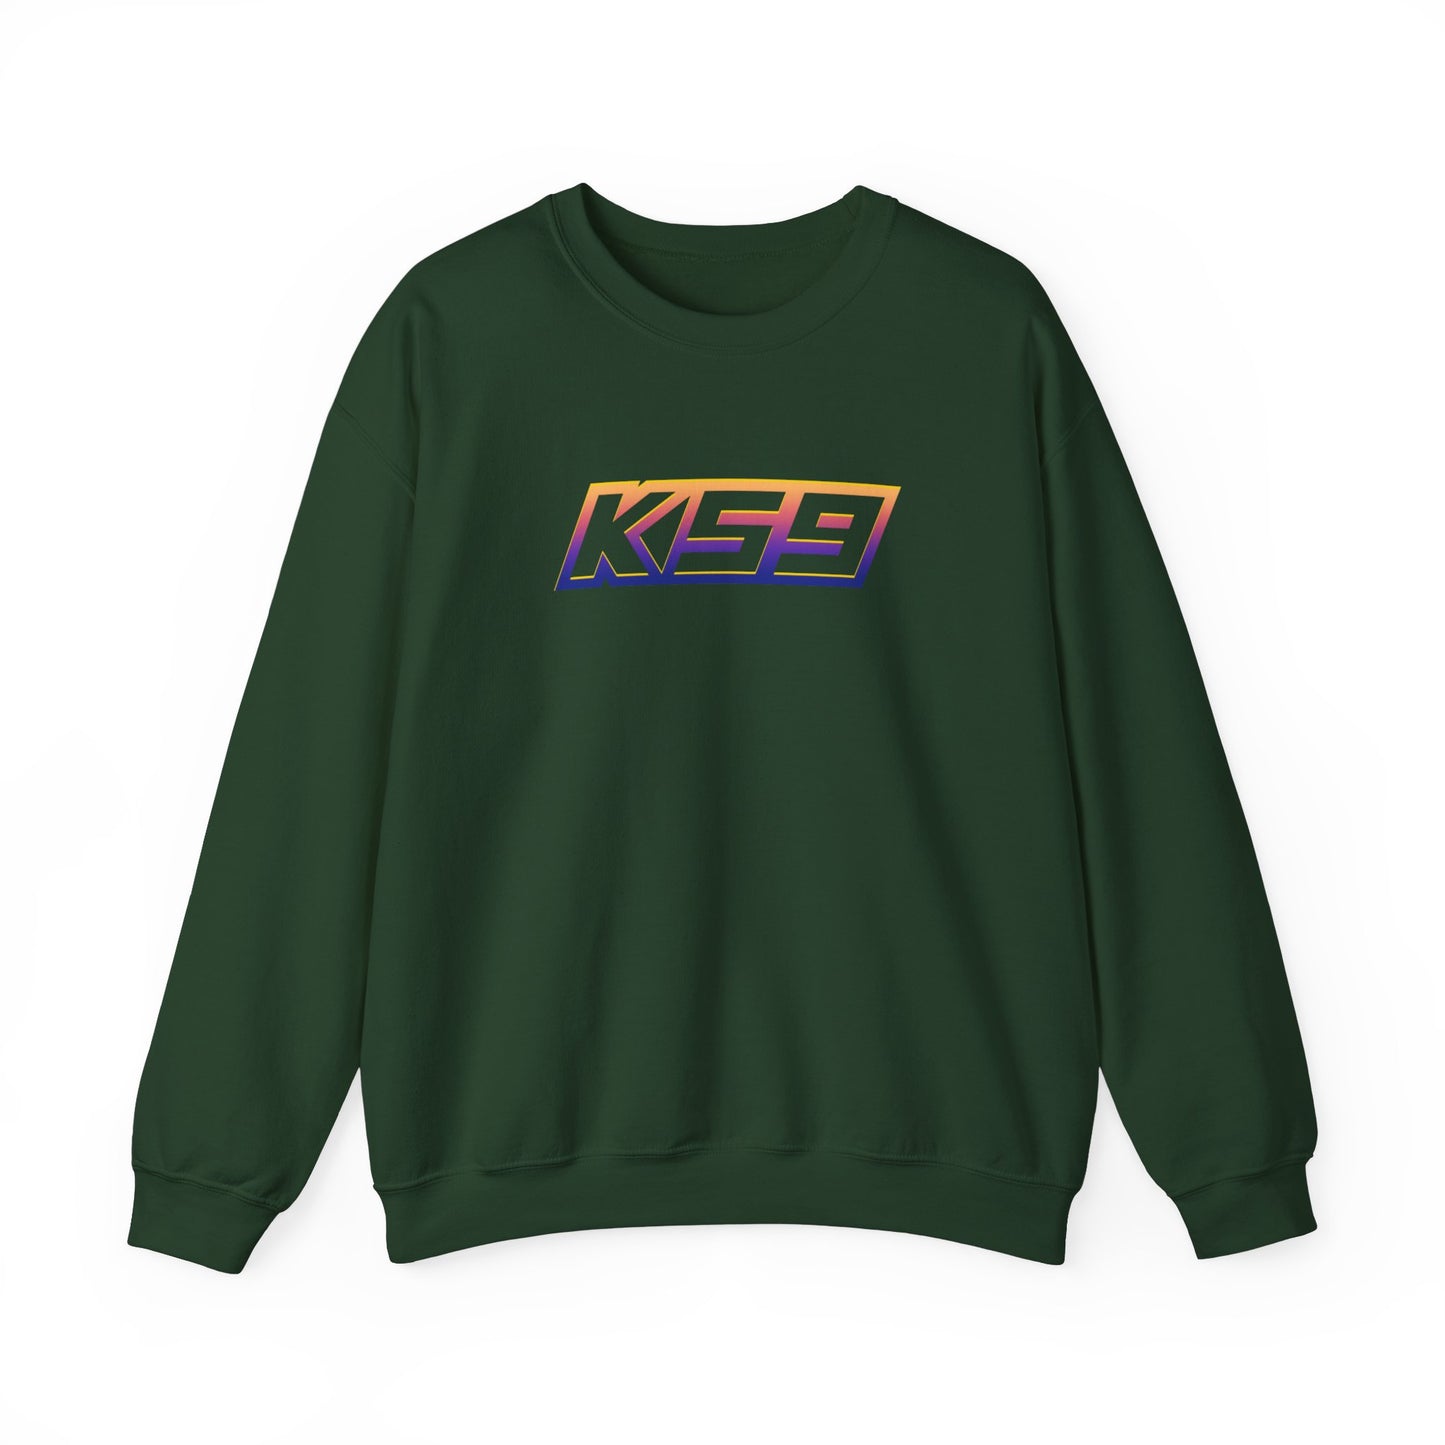 K59 Crewneck Sweatshirt